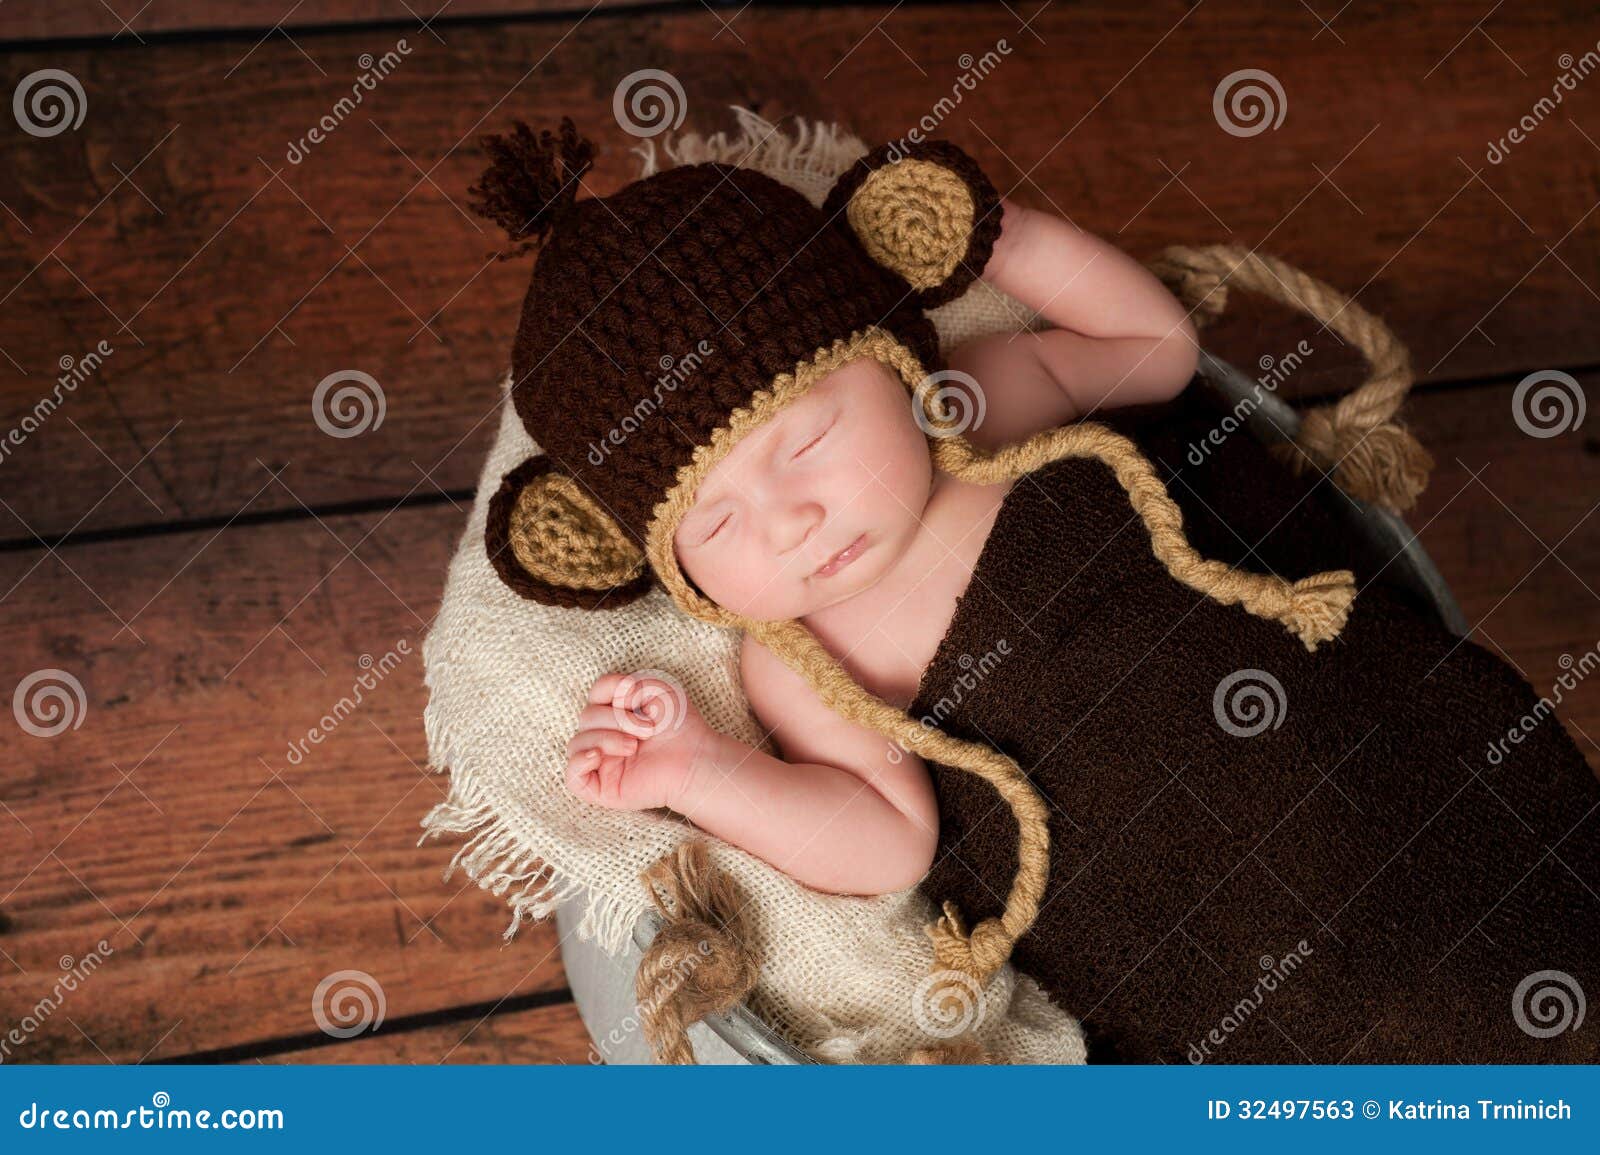  - newborn-baby-wearing-monkey-hat-crocheted-sleeping-galvanized-bucket-shot-studio-rustic-wood-background-32497563